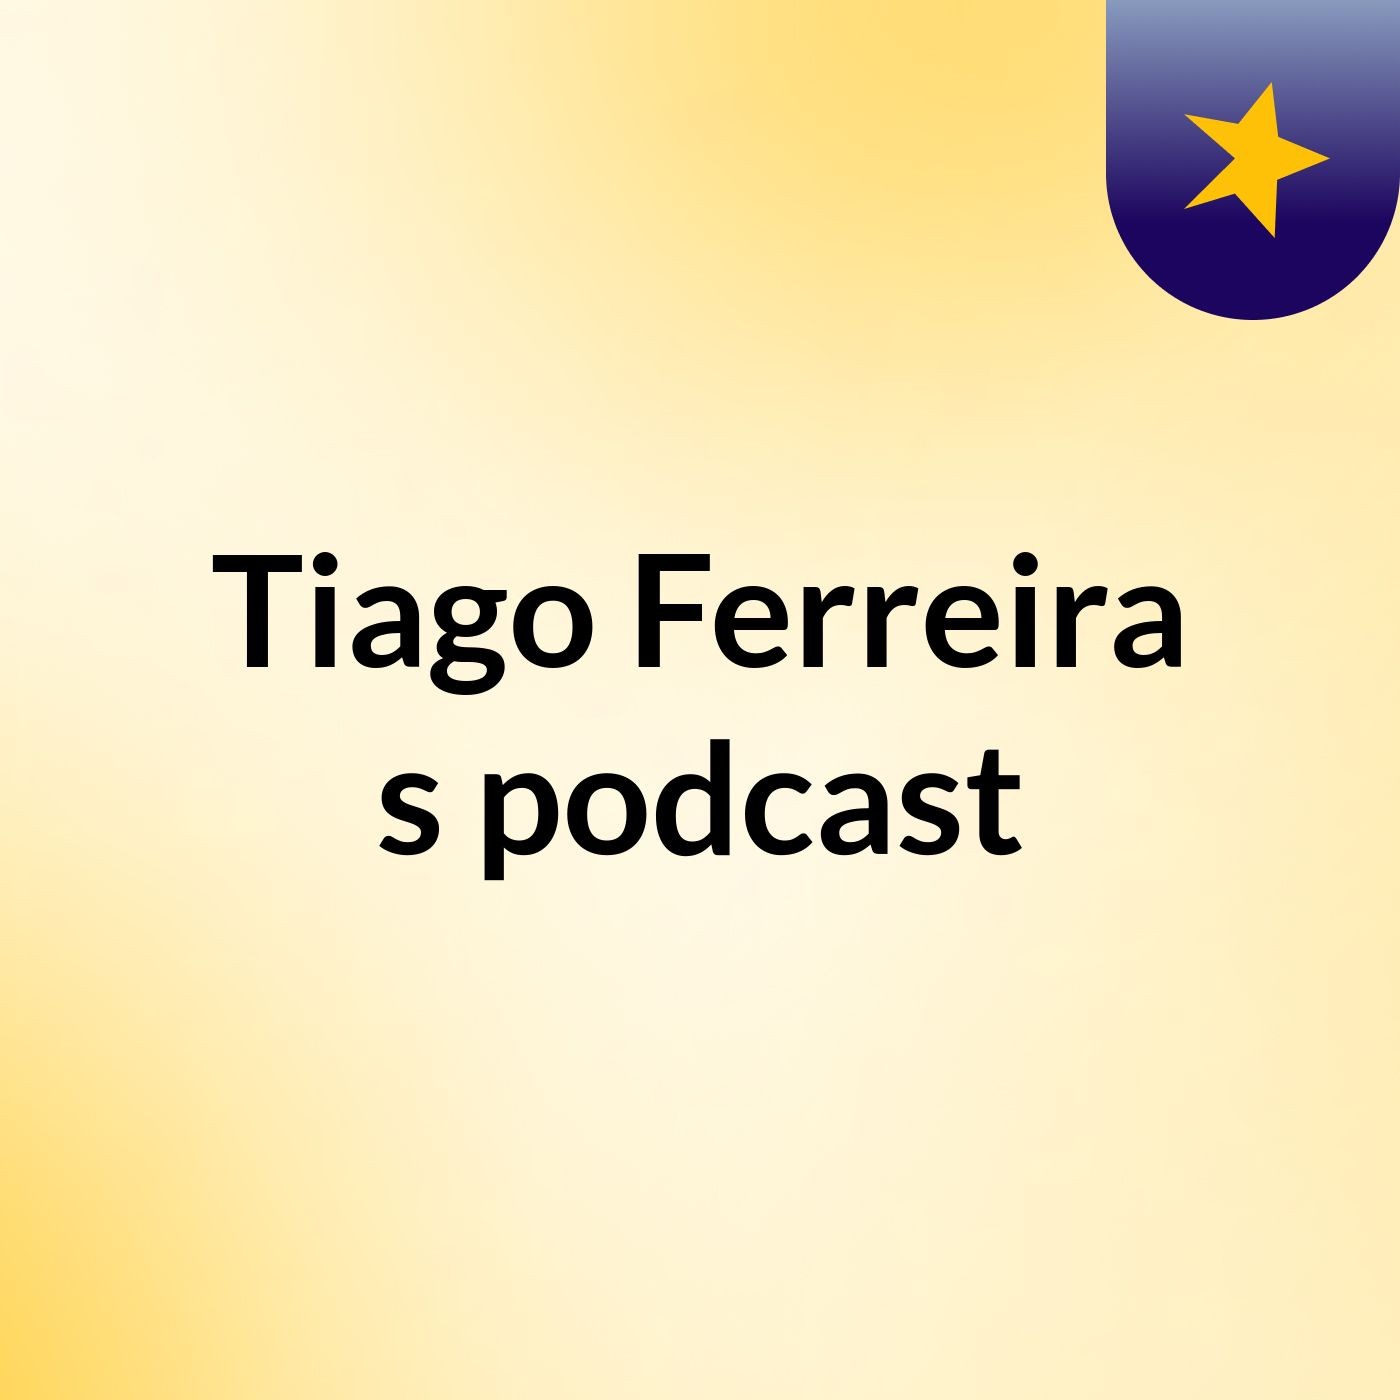 Tiago Ferreira's podcast